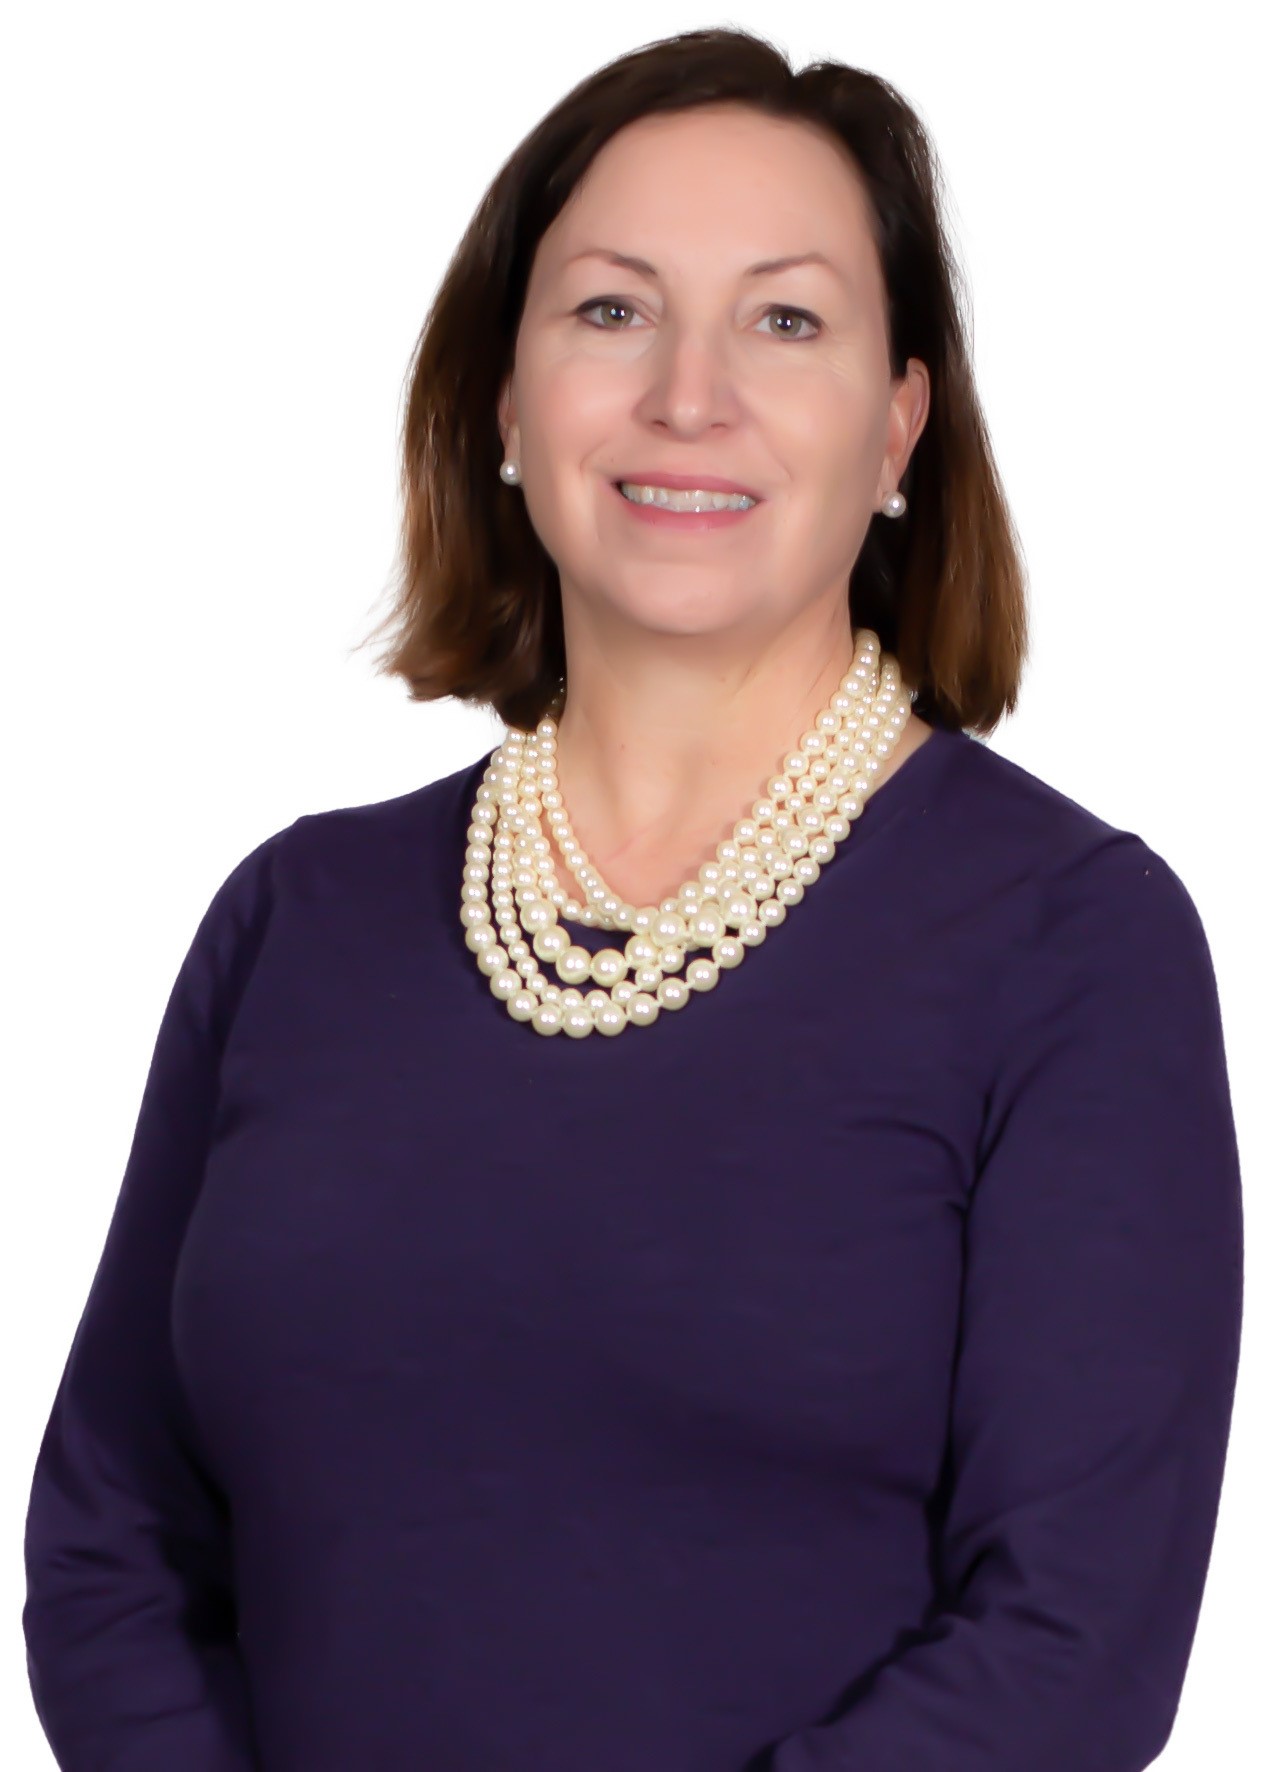 Cindy Garner Executive Director